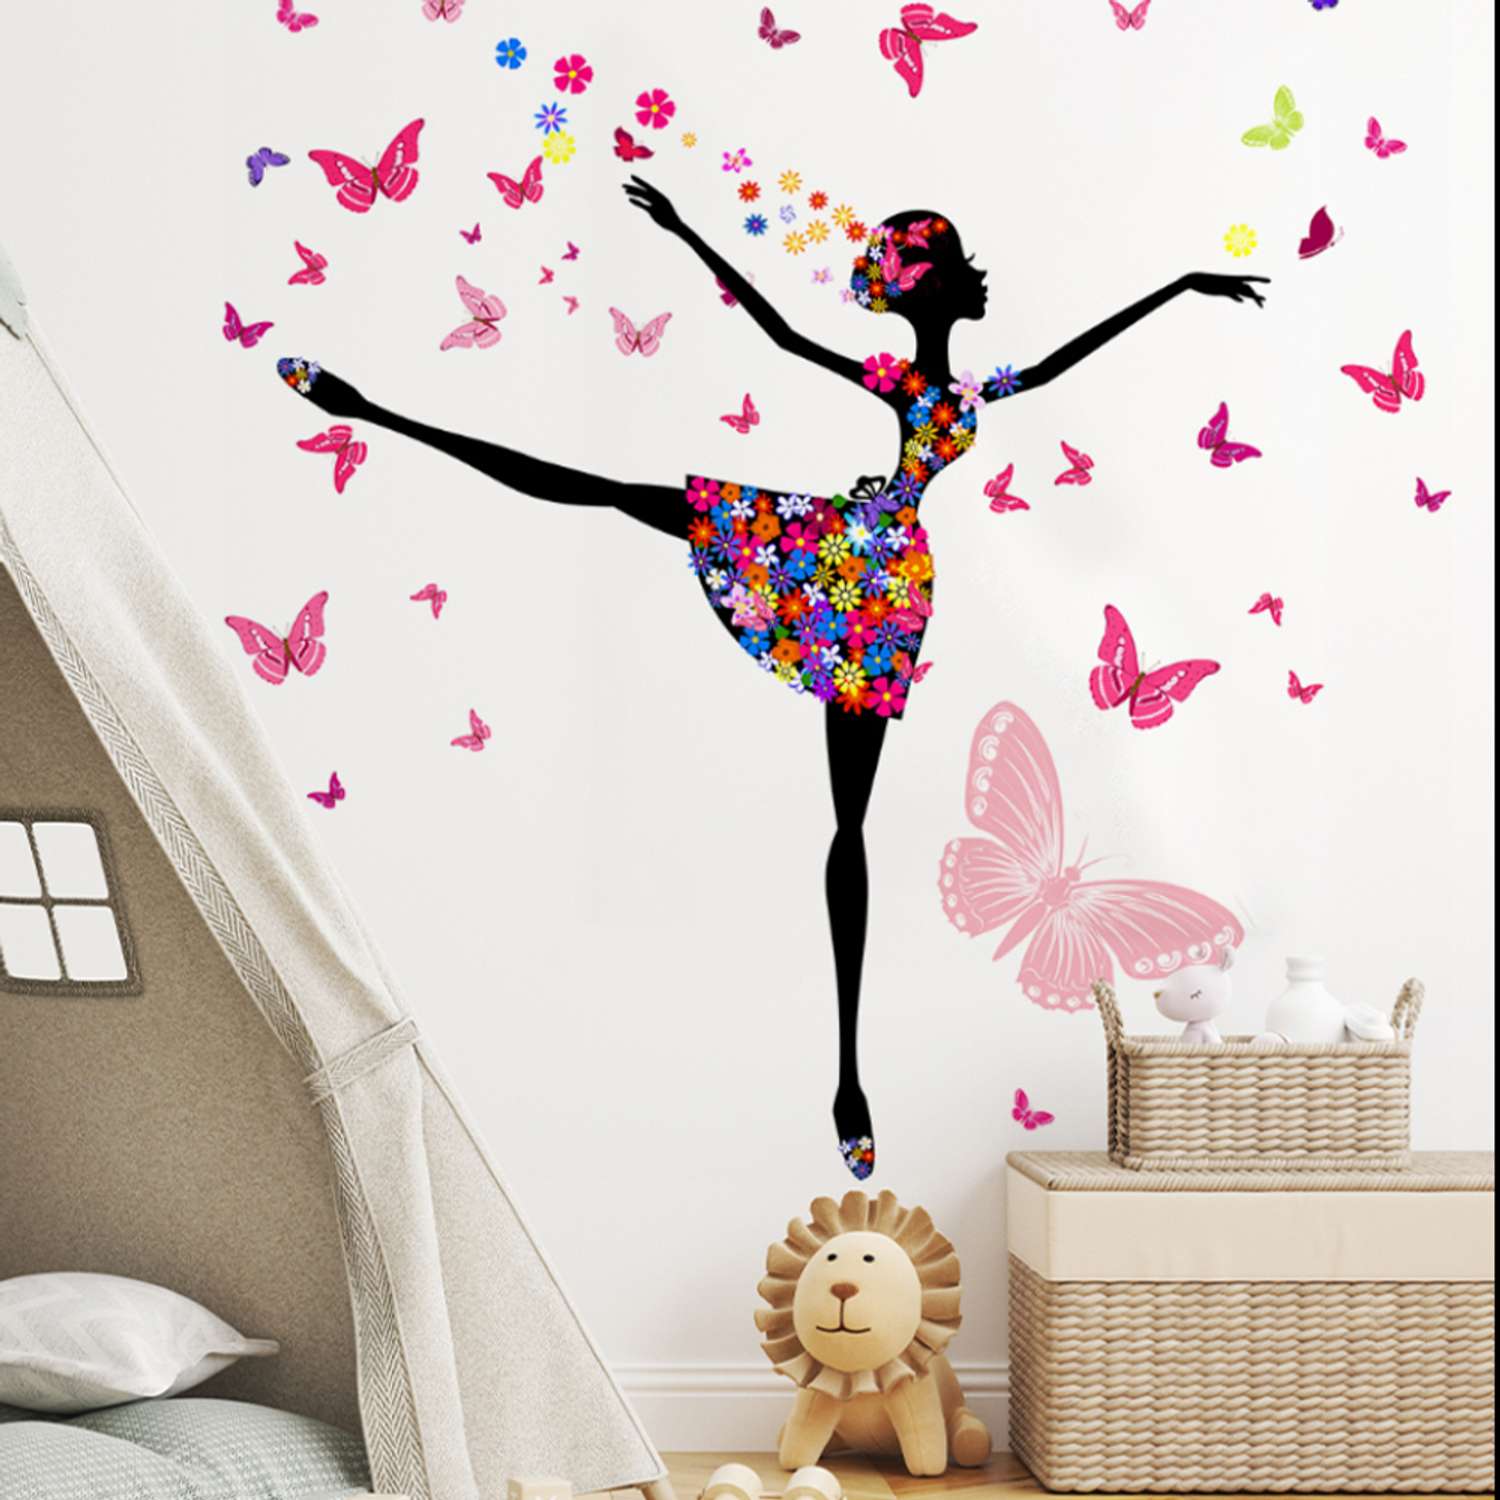 Наклейка интерьерная Woozzee Балерина с бабочками - фото 1